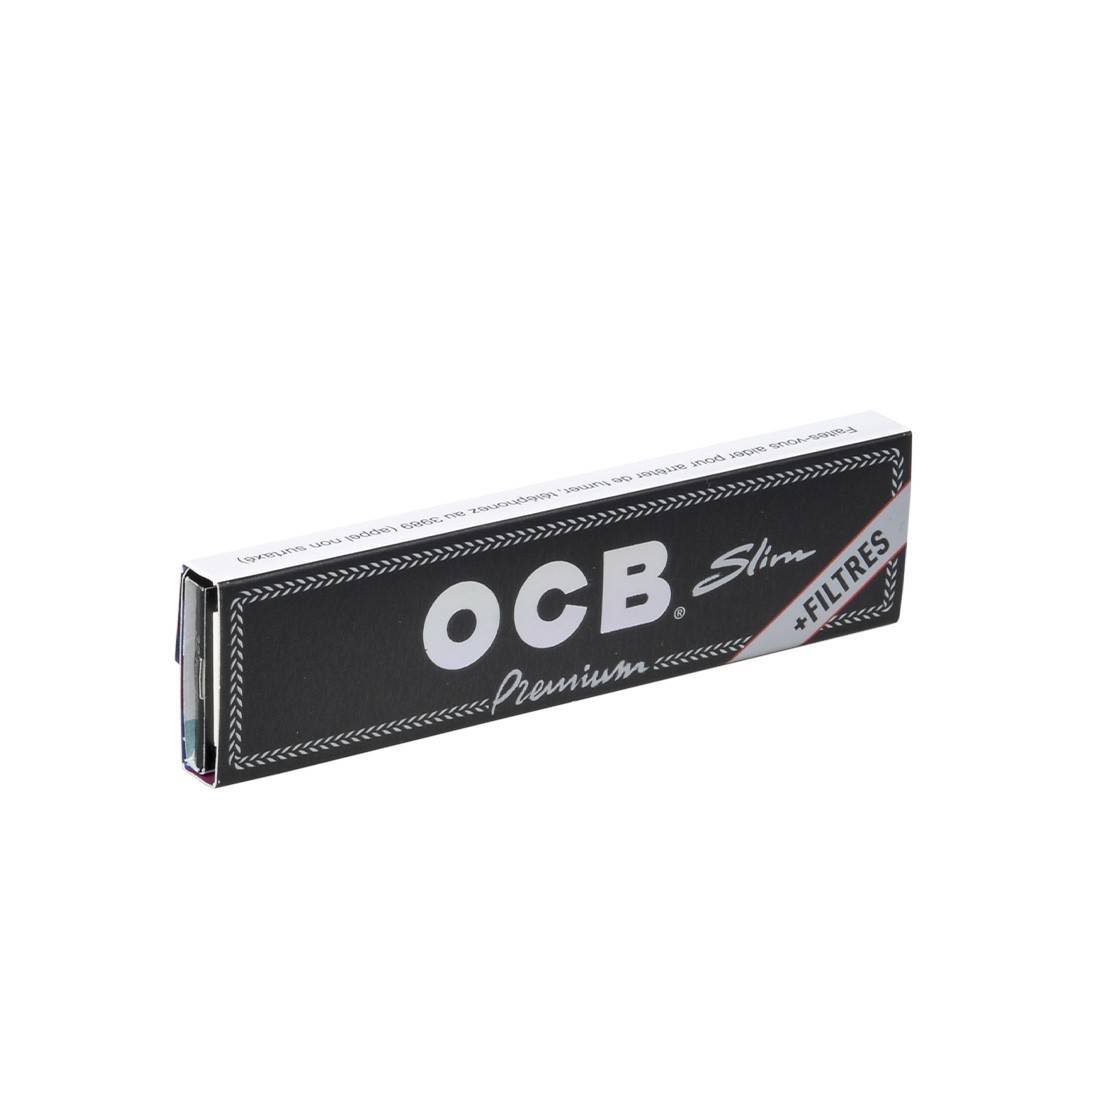 OCB Slim Tips x1 - Feuille à Rouler avec Filtre carton - MajorSmoker